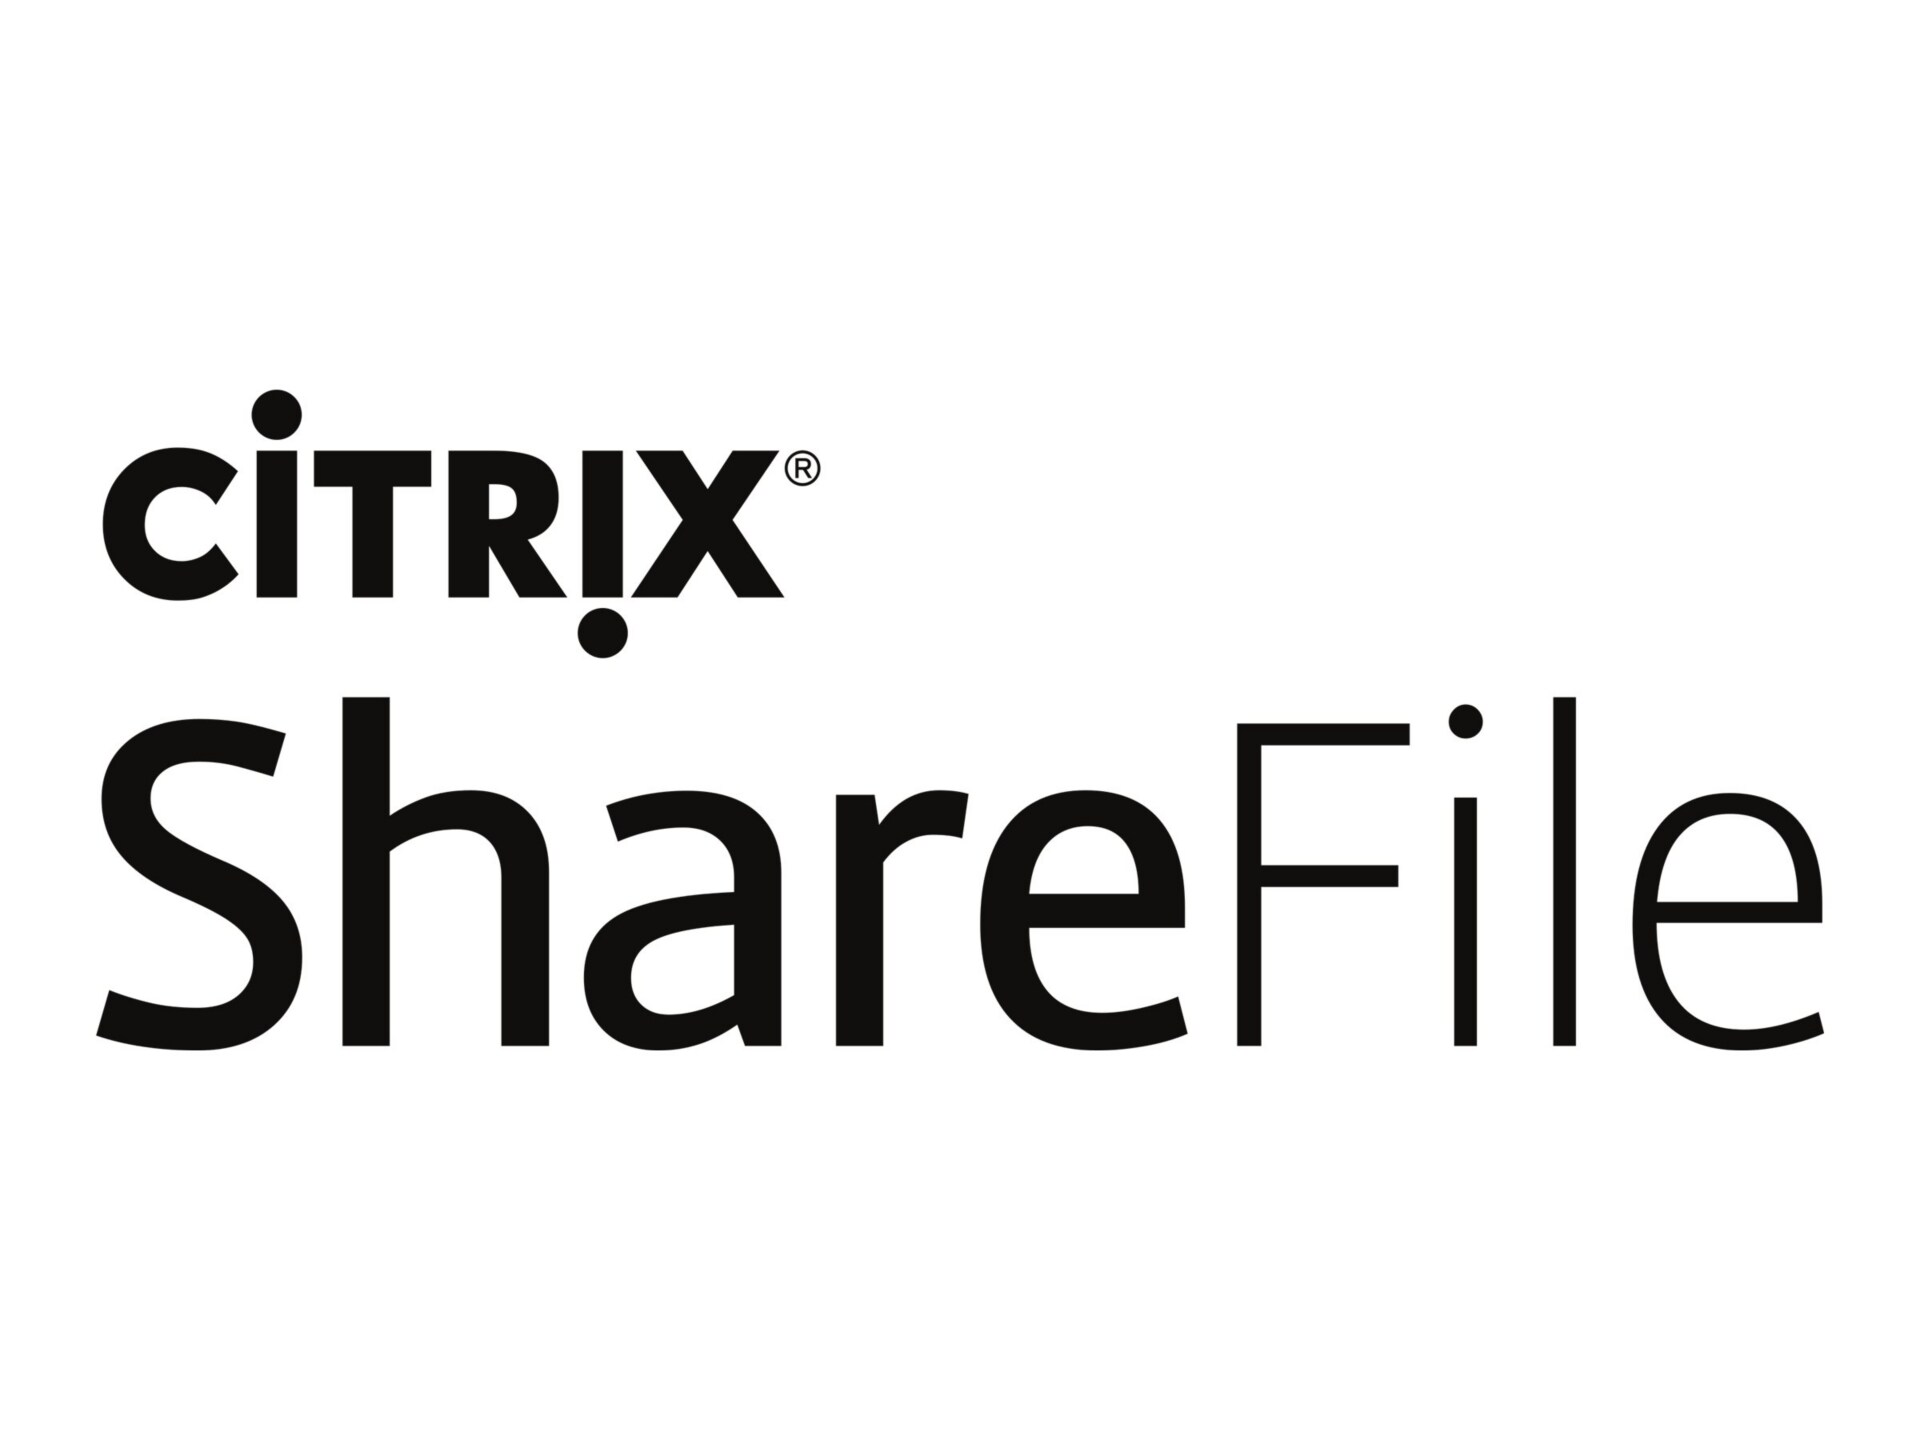 Citrix ShareFile Enterprise Edition - license - 1 license